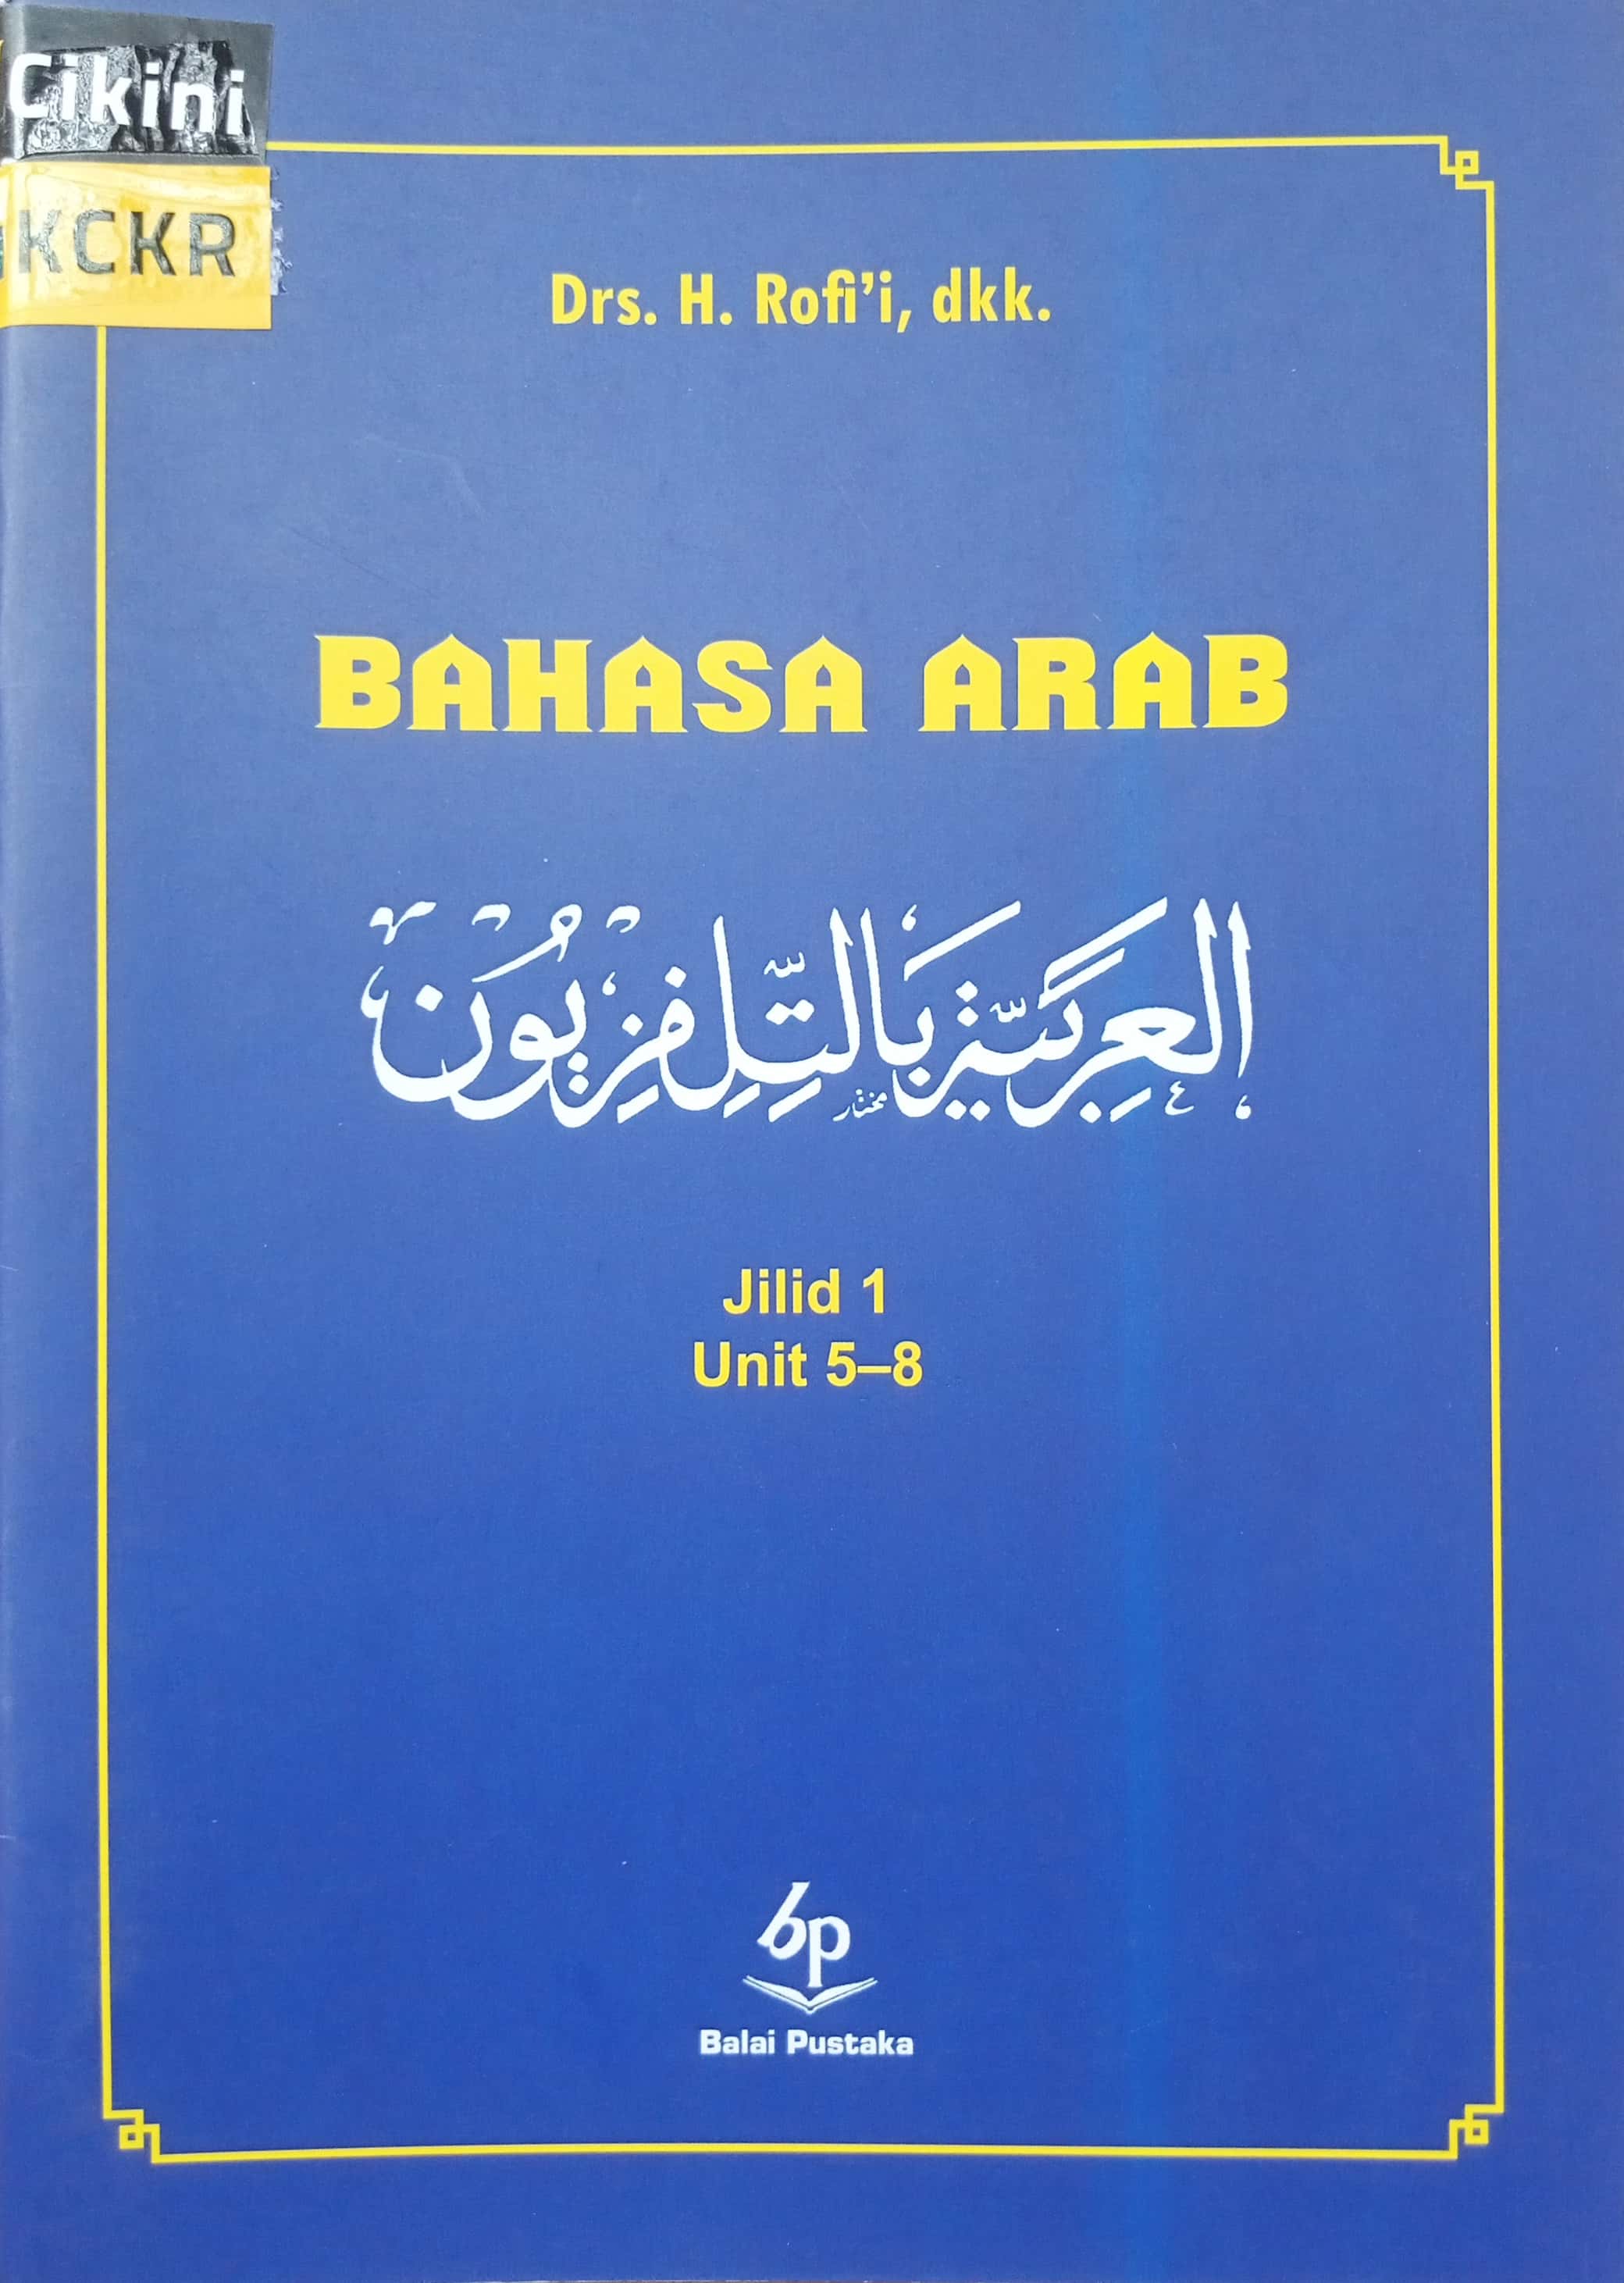 Bahasa Arab jilid 1 unit 5-8